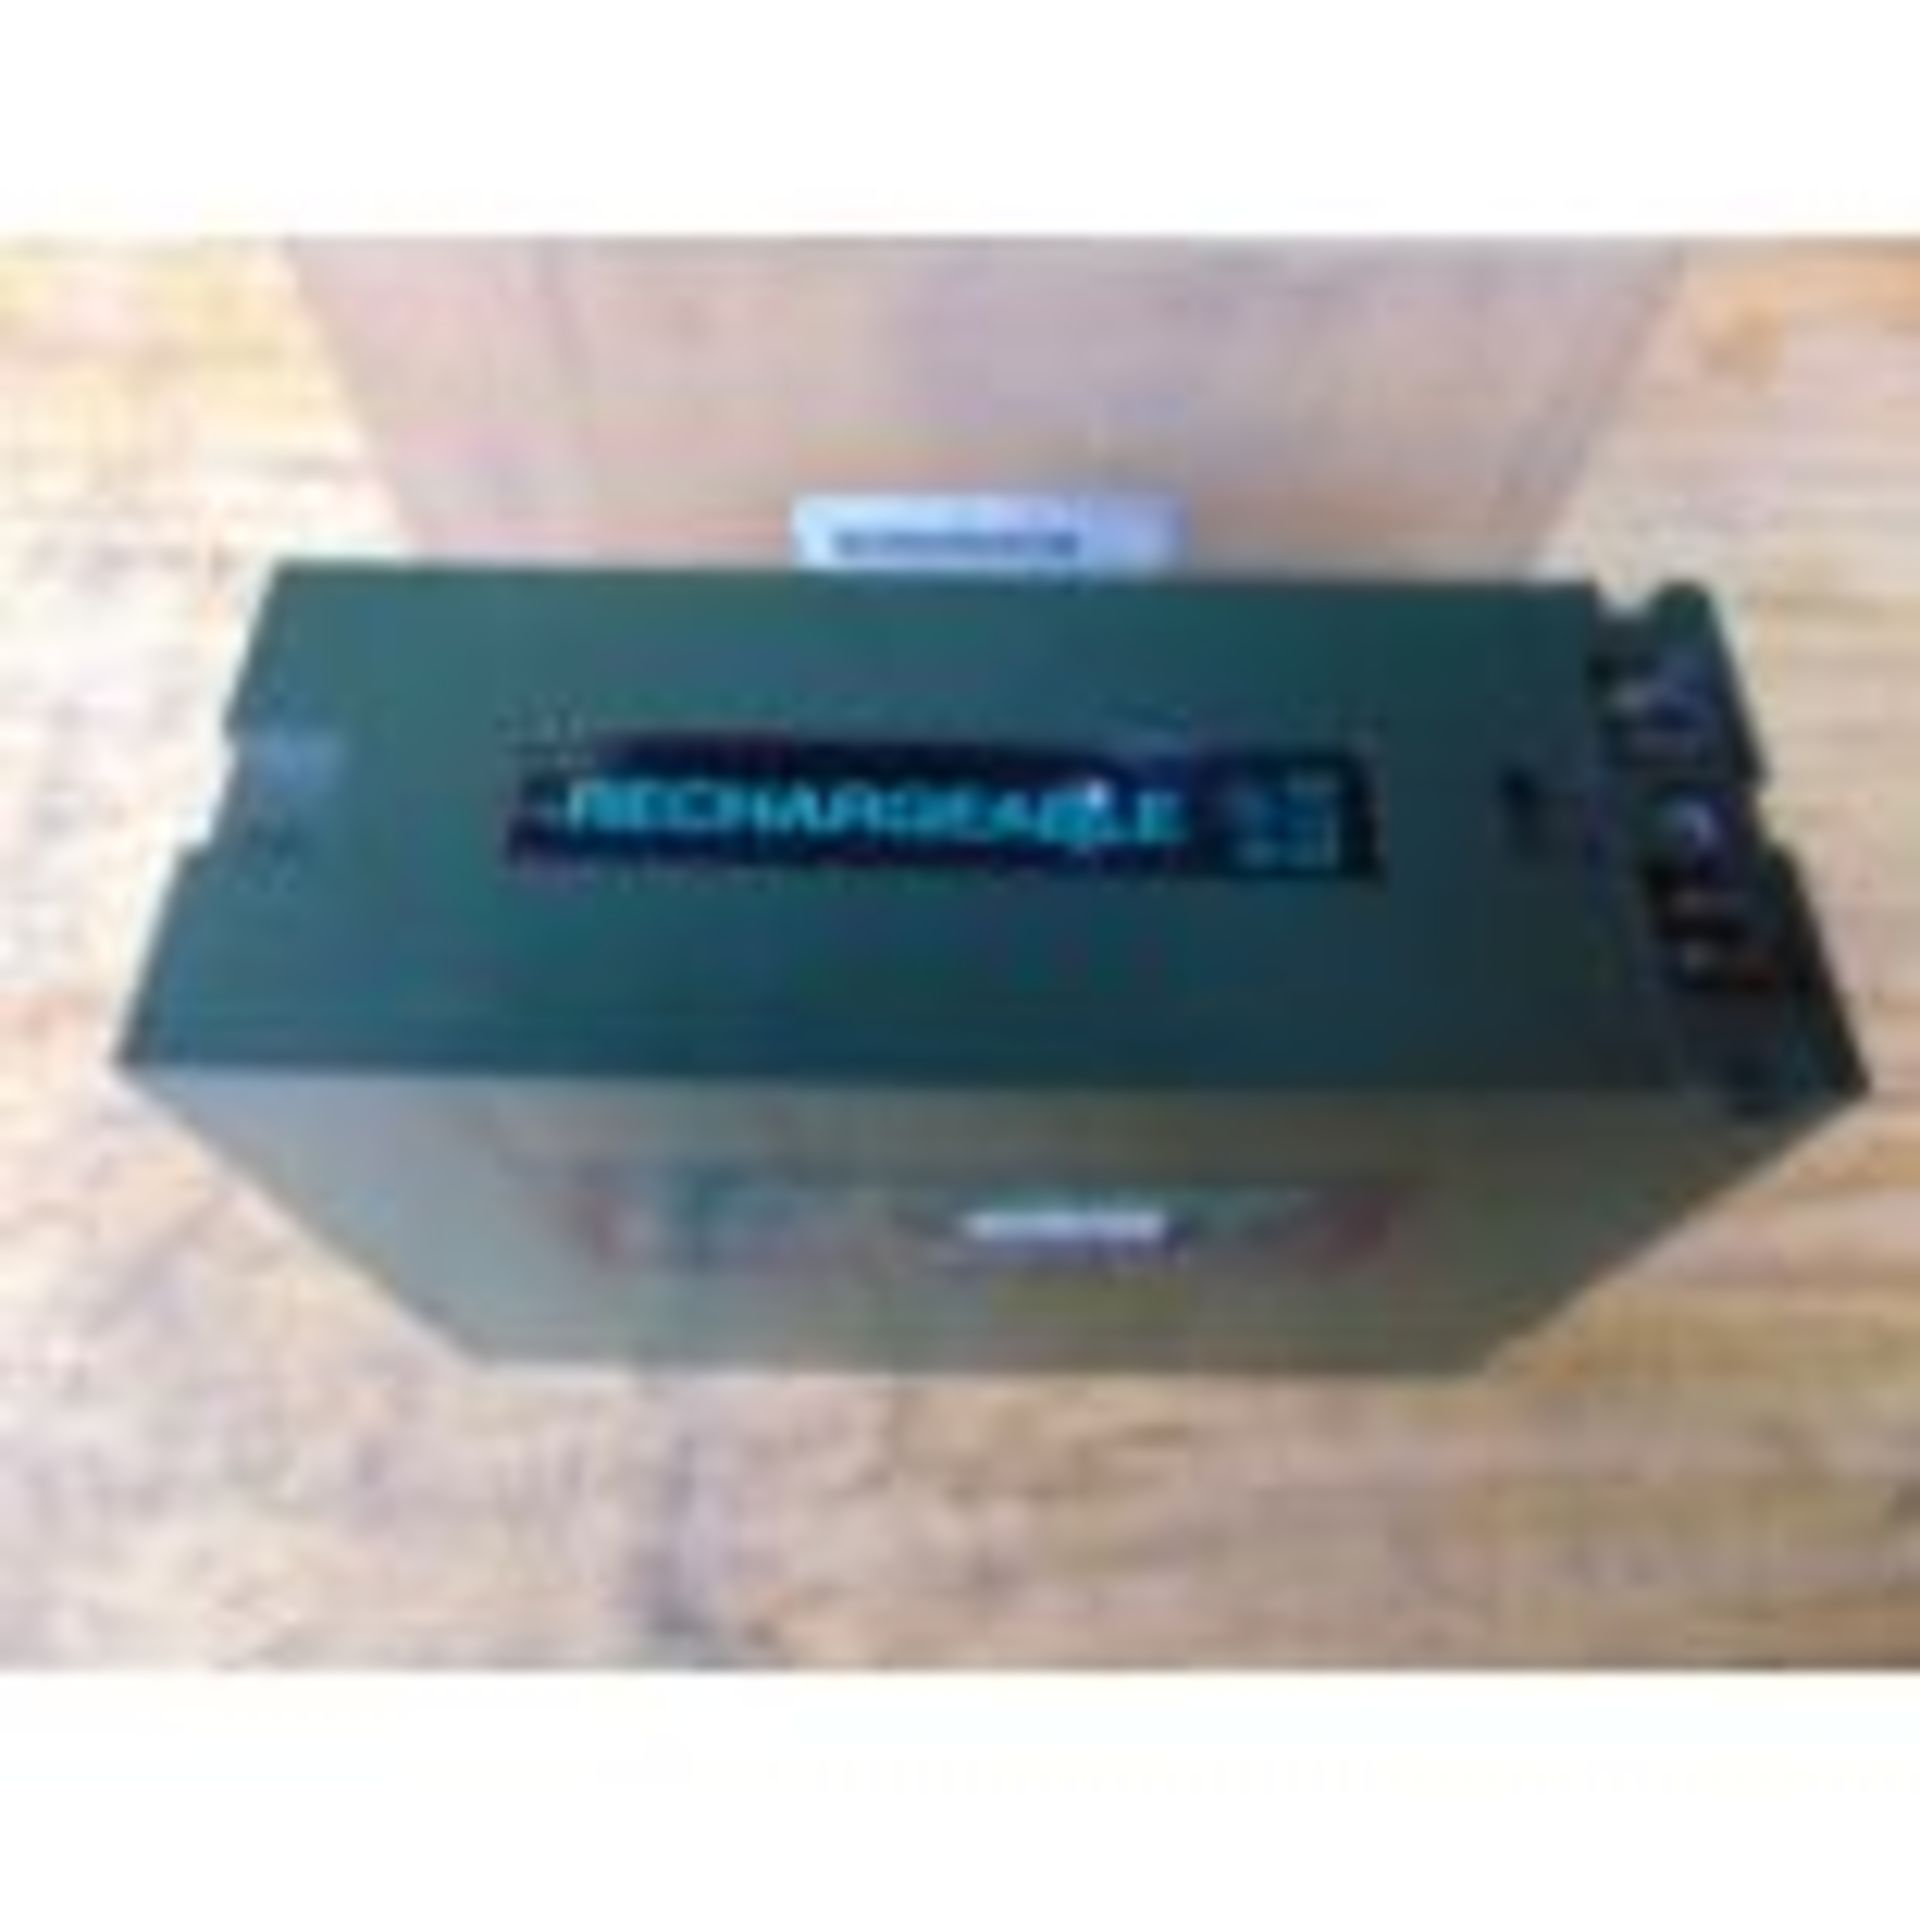 2 x New Unissued Clansman 24 Volt 5AH Rechargeable Batteries - Image 2 of 4